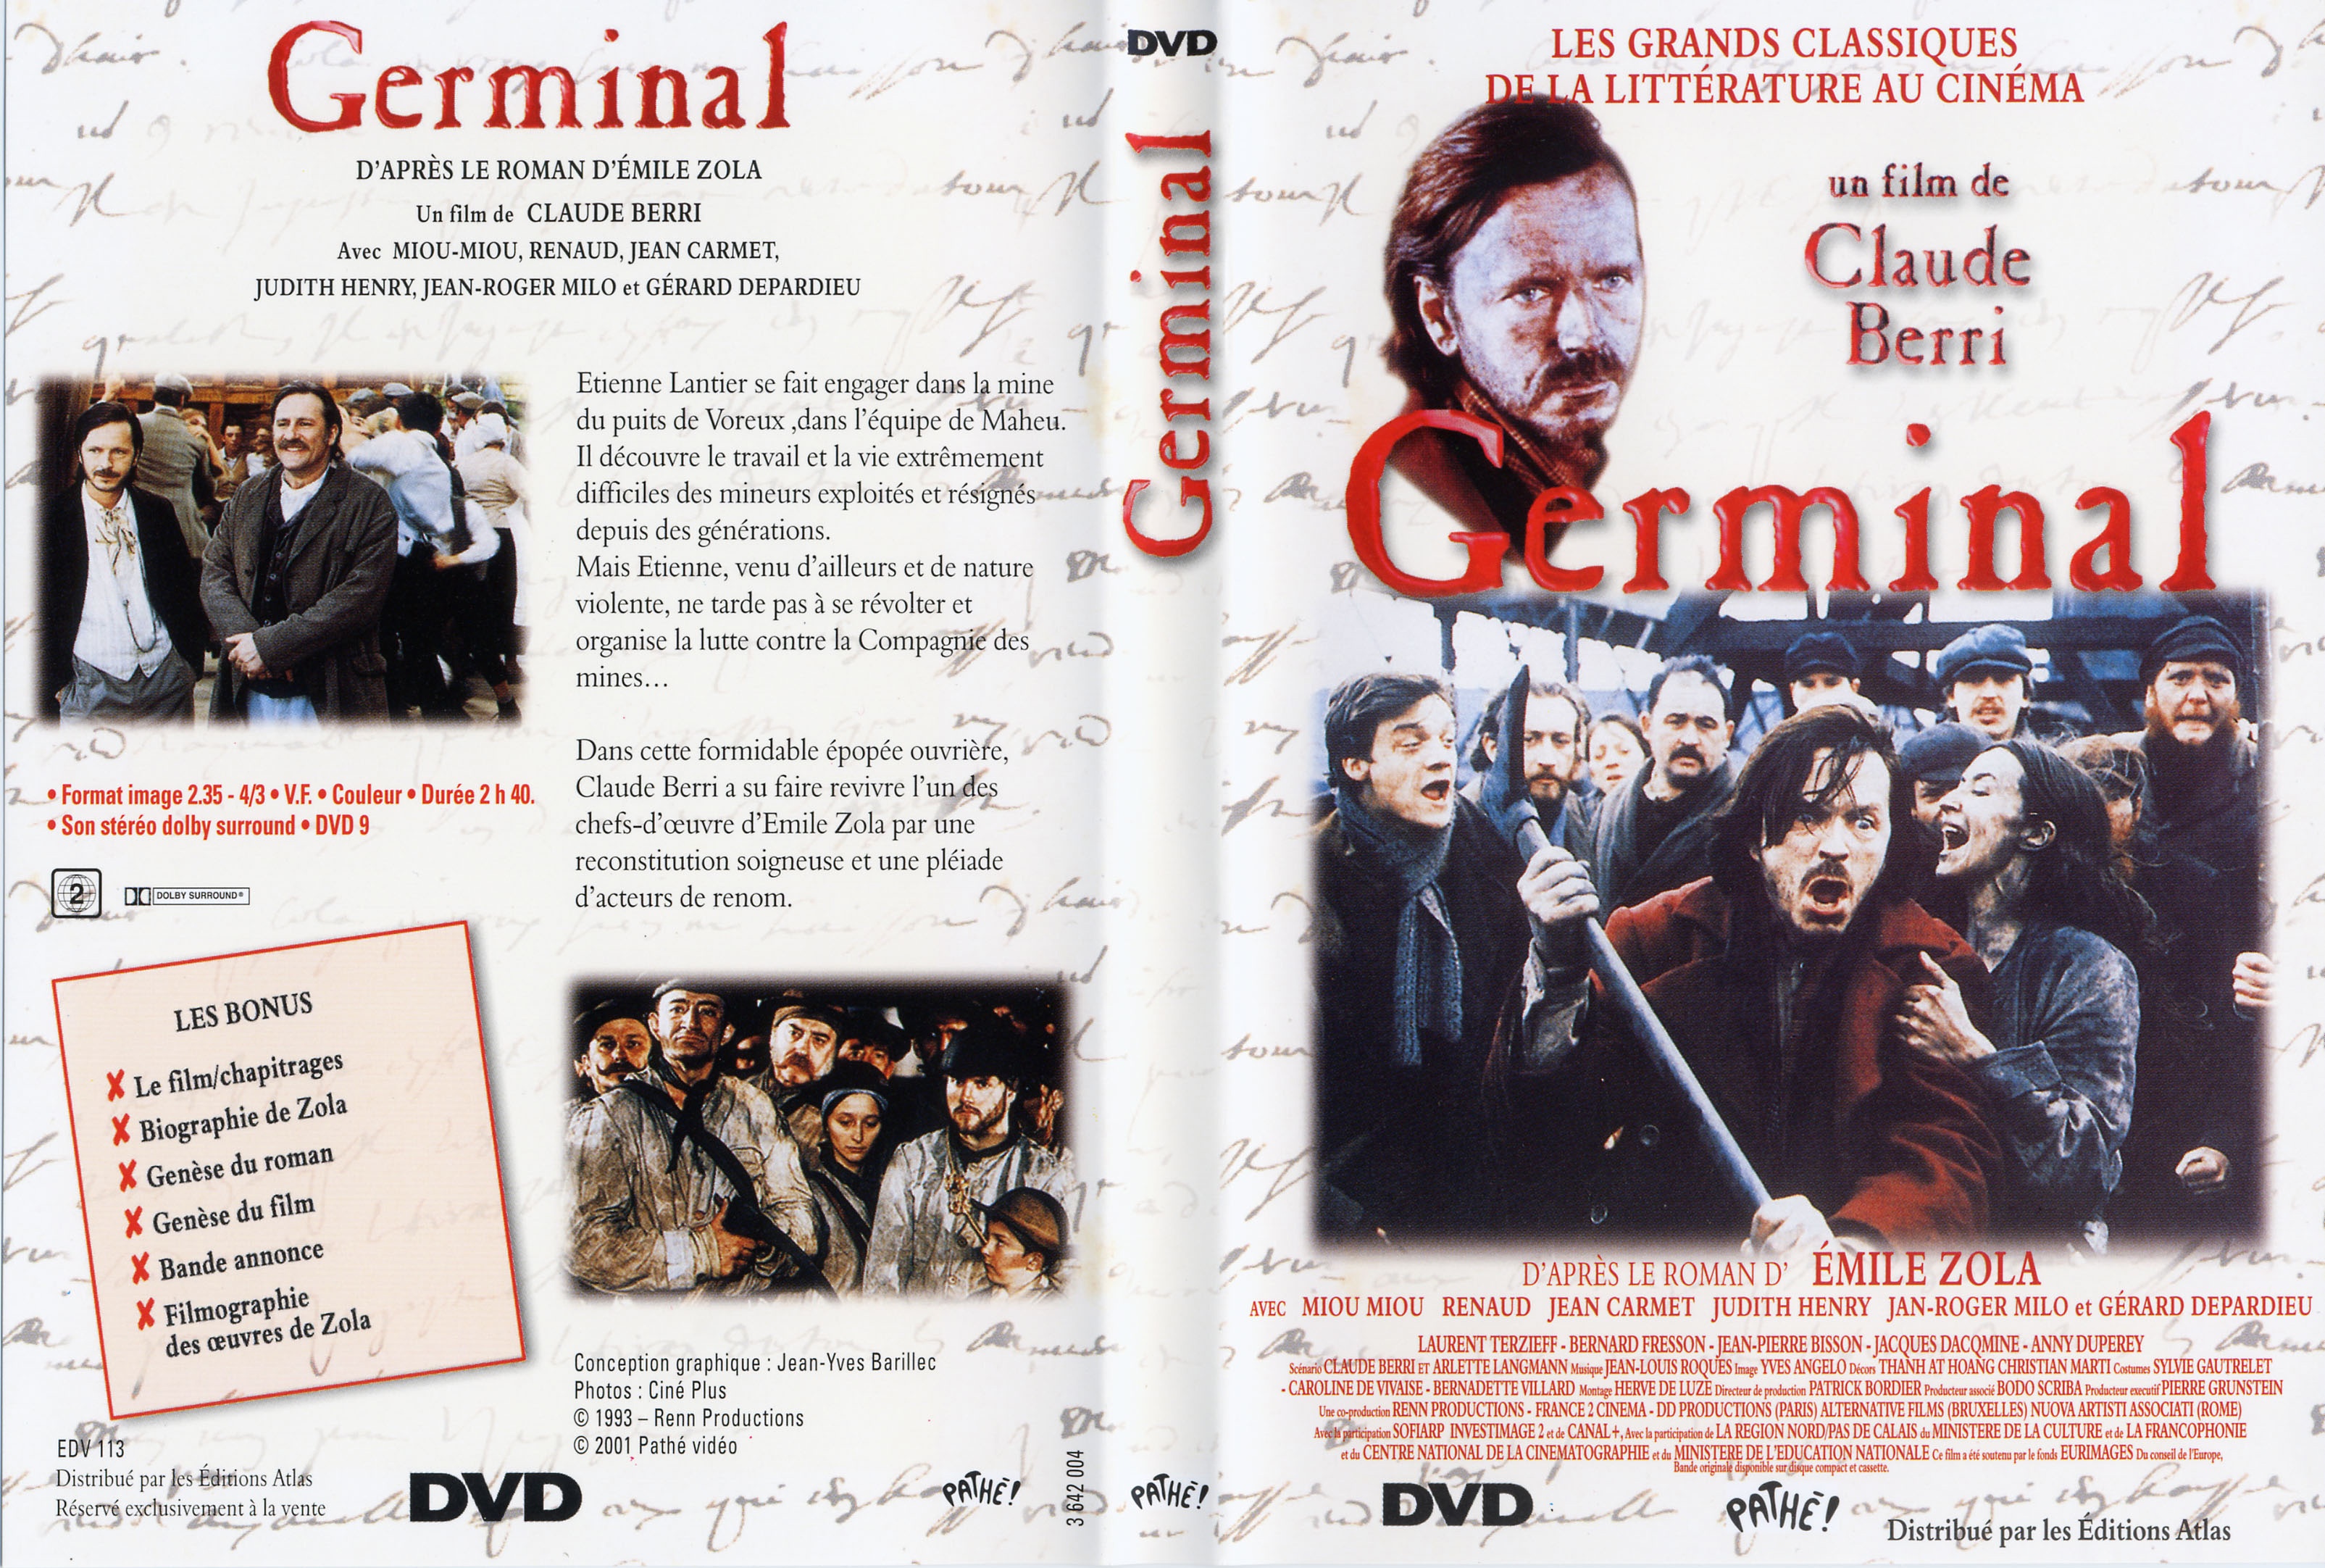 Jaquette DVD Germinal v2